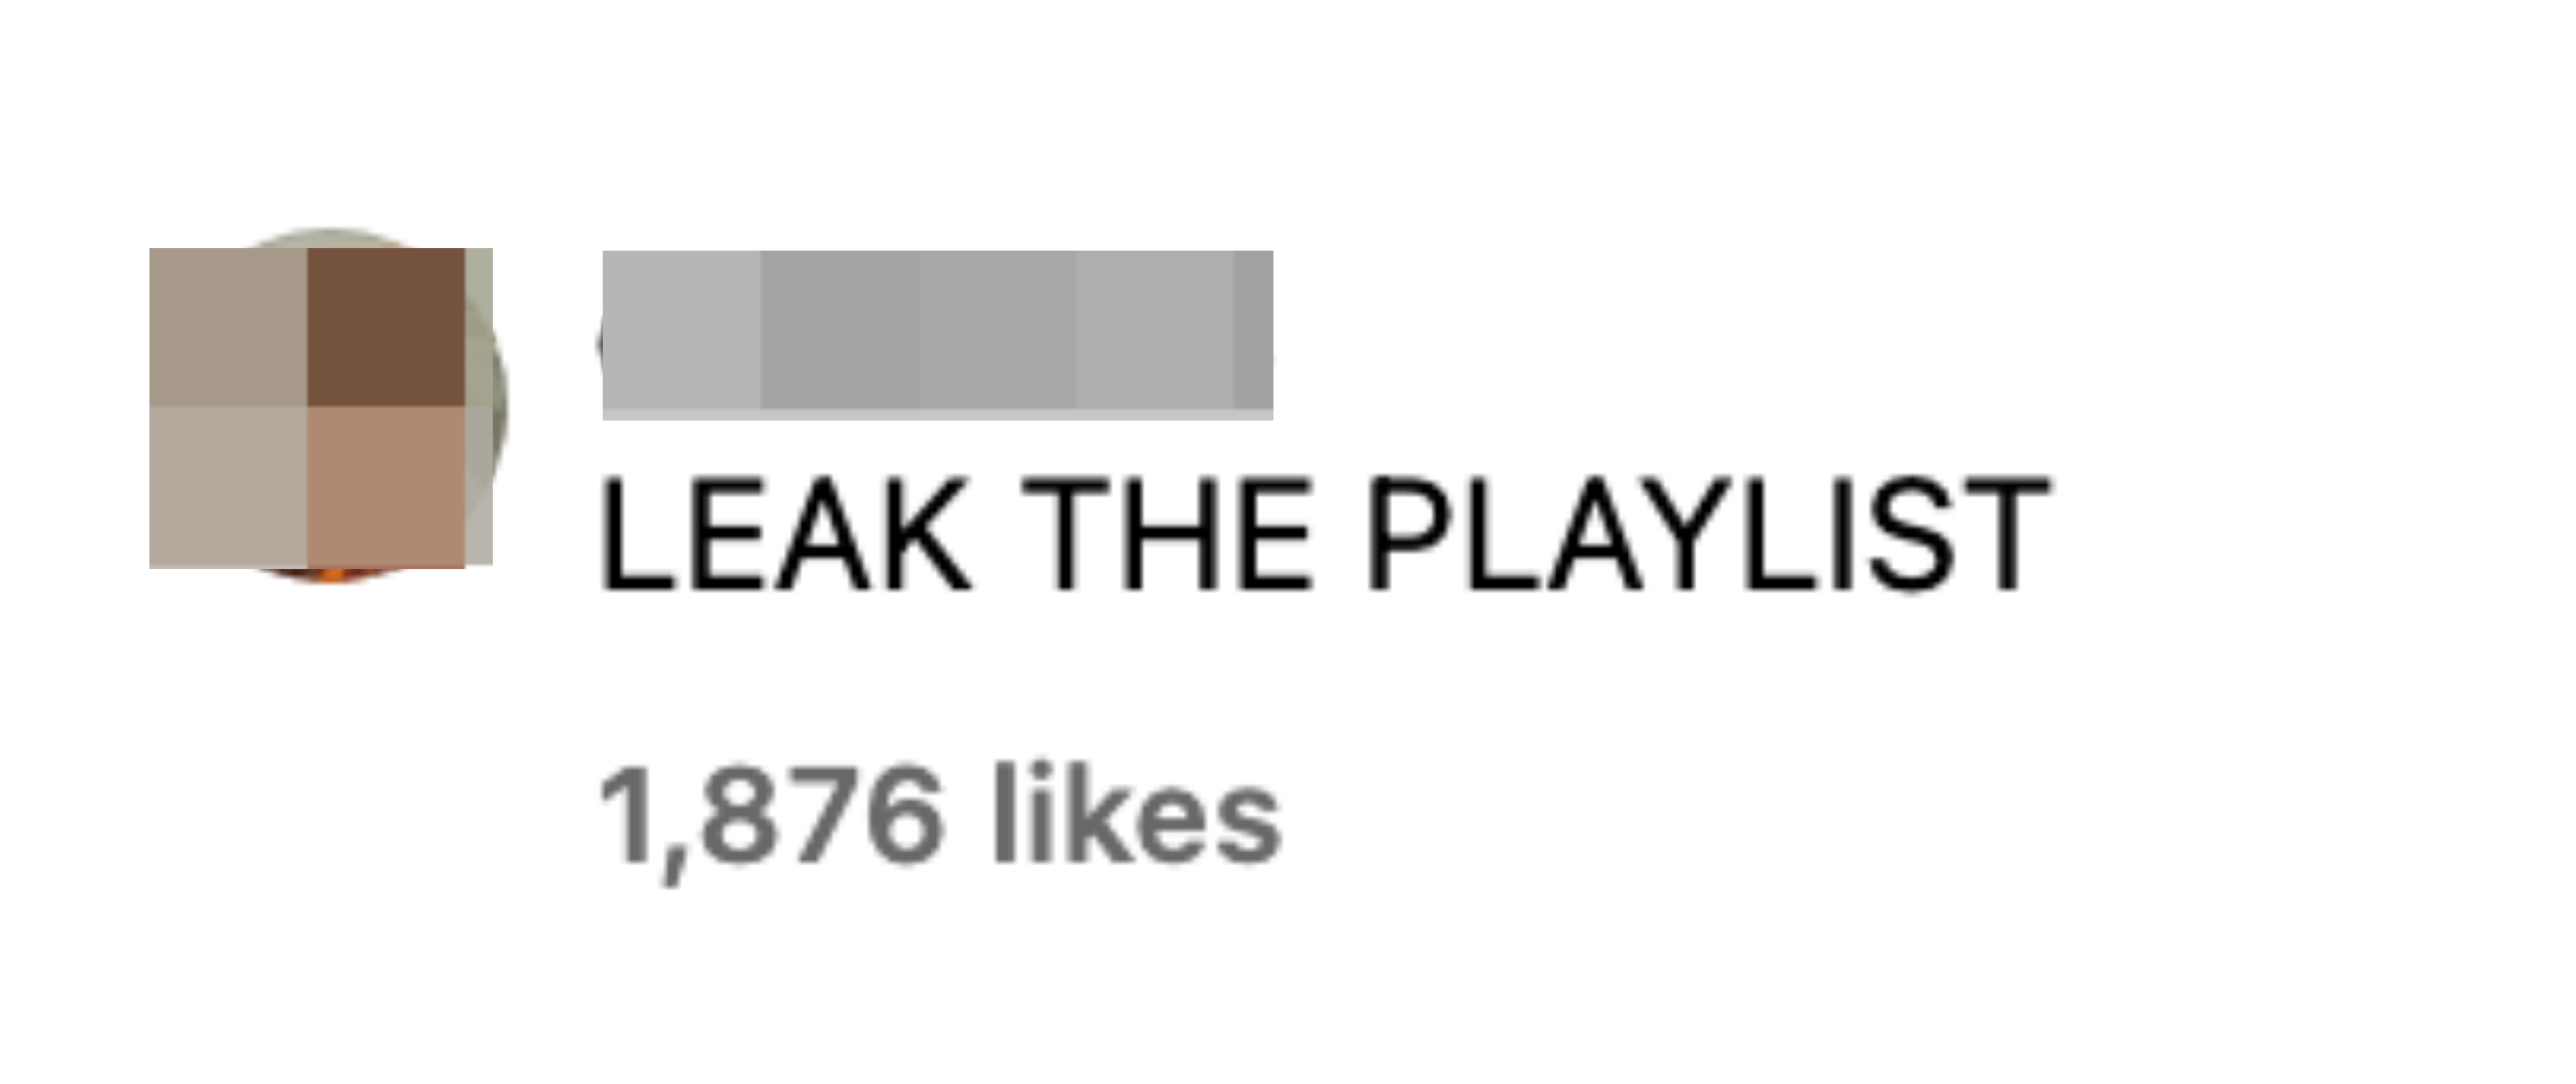 Someone commented, &quot;LEAK THE PLAYLIST&quot;